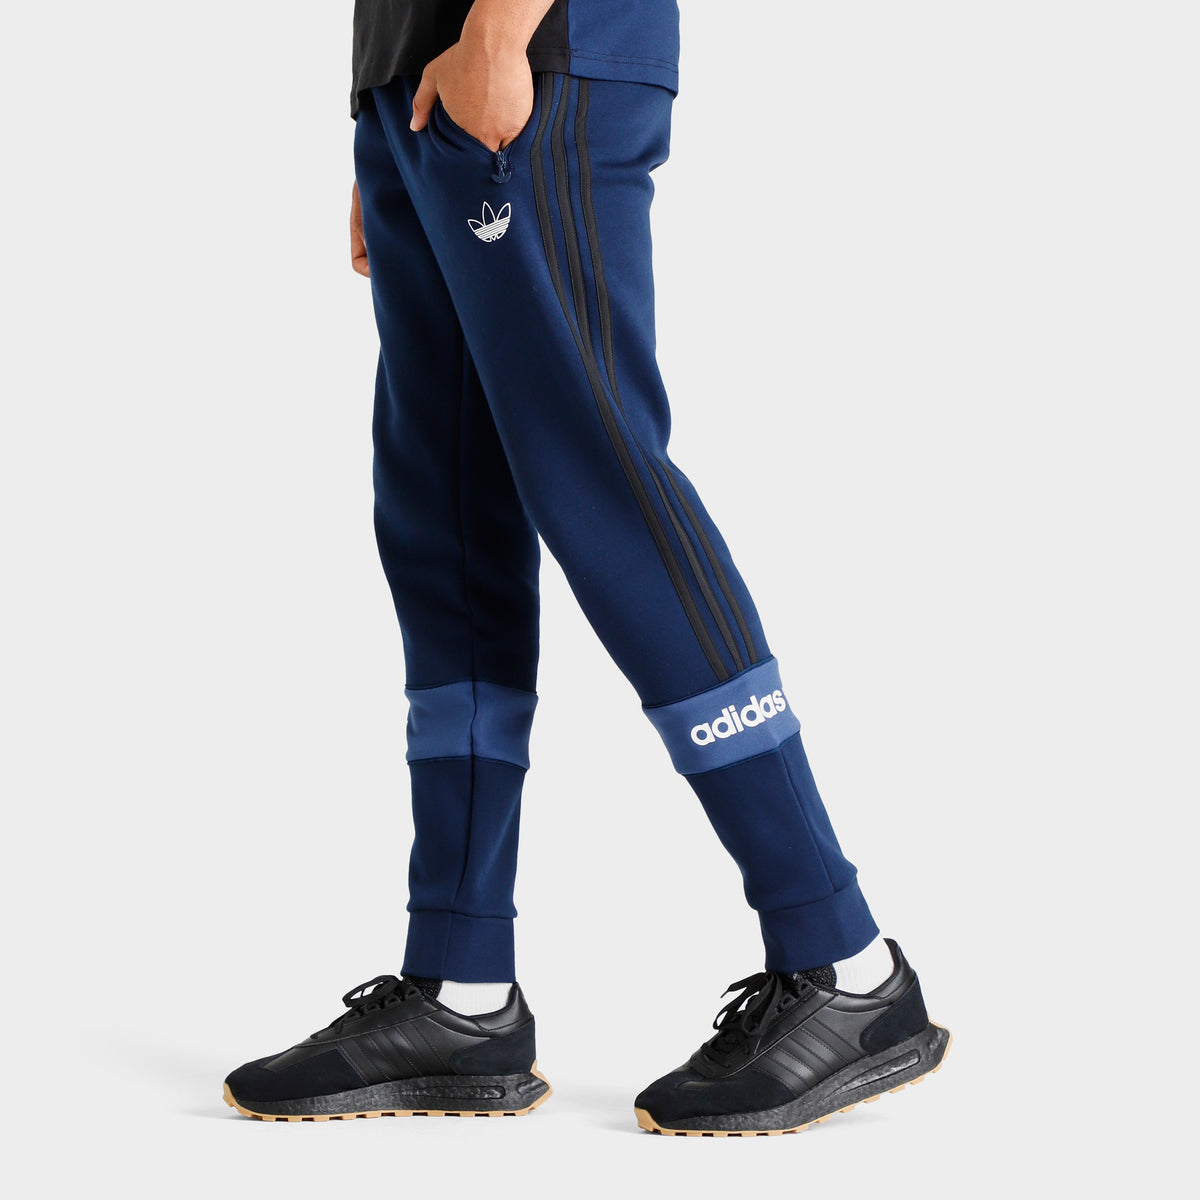 Adidas Originals Superstar Track Pants Navy Blue